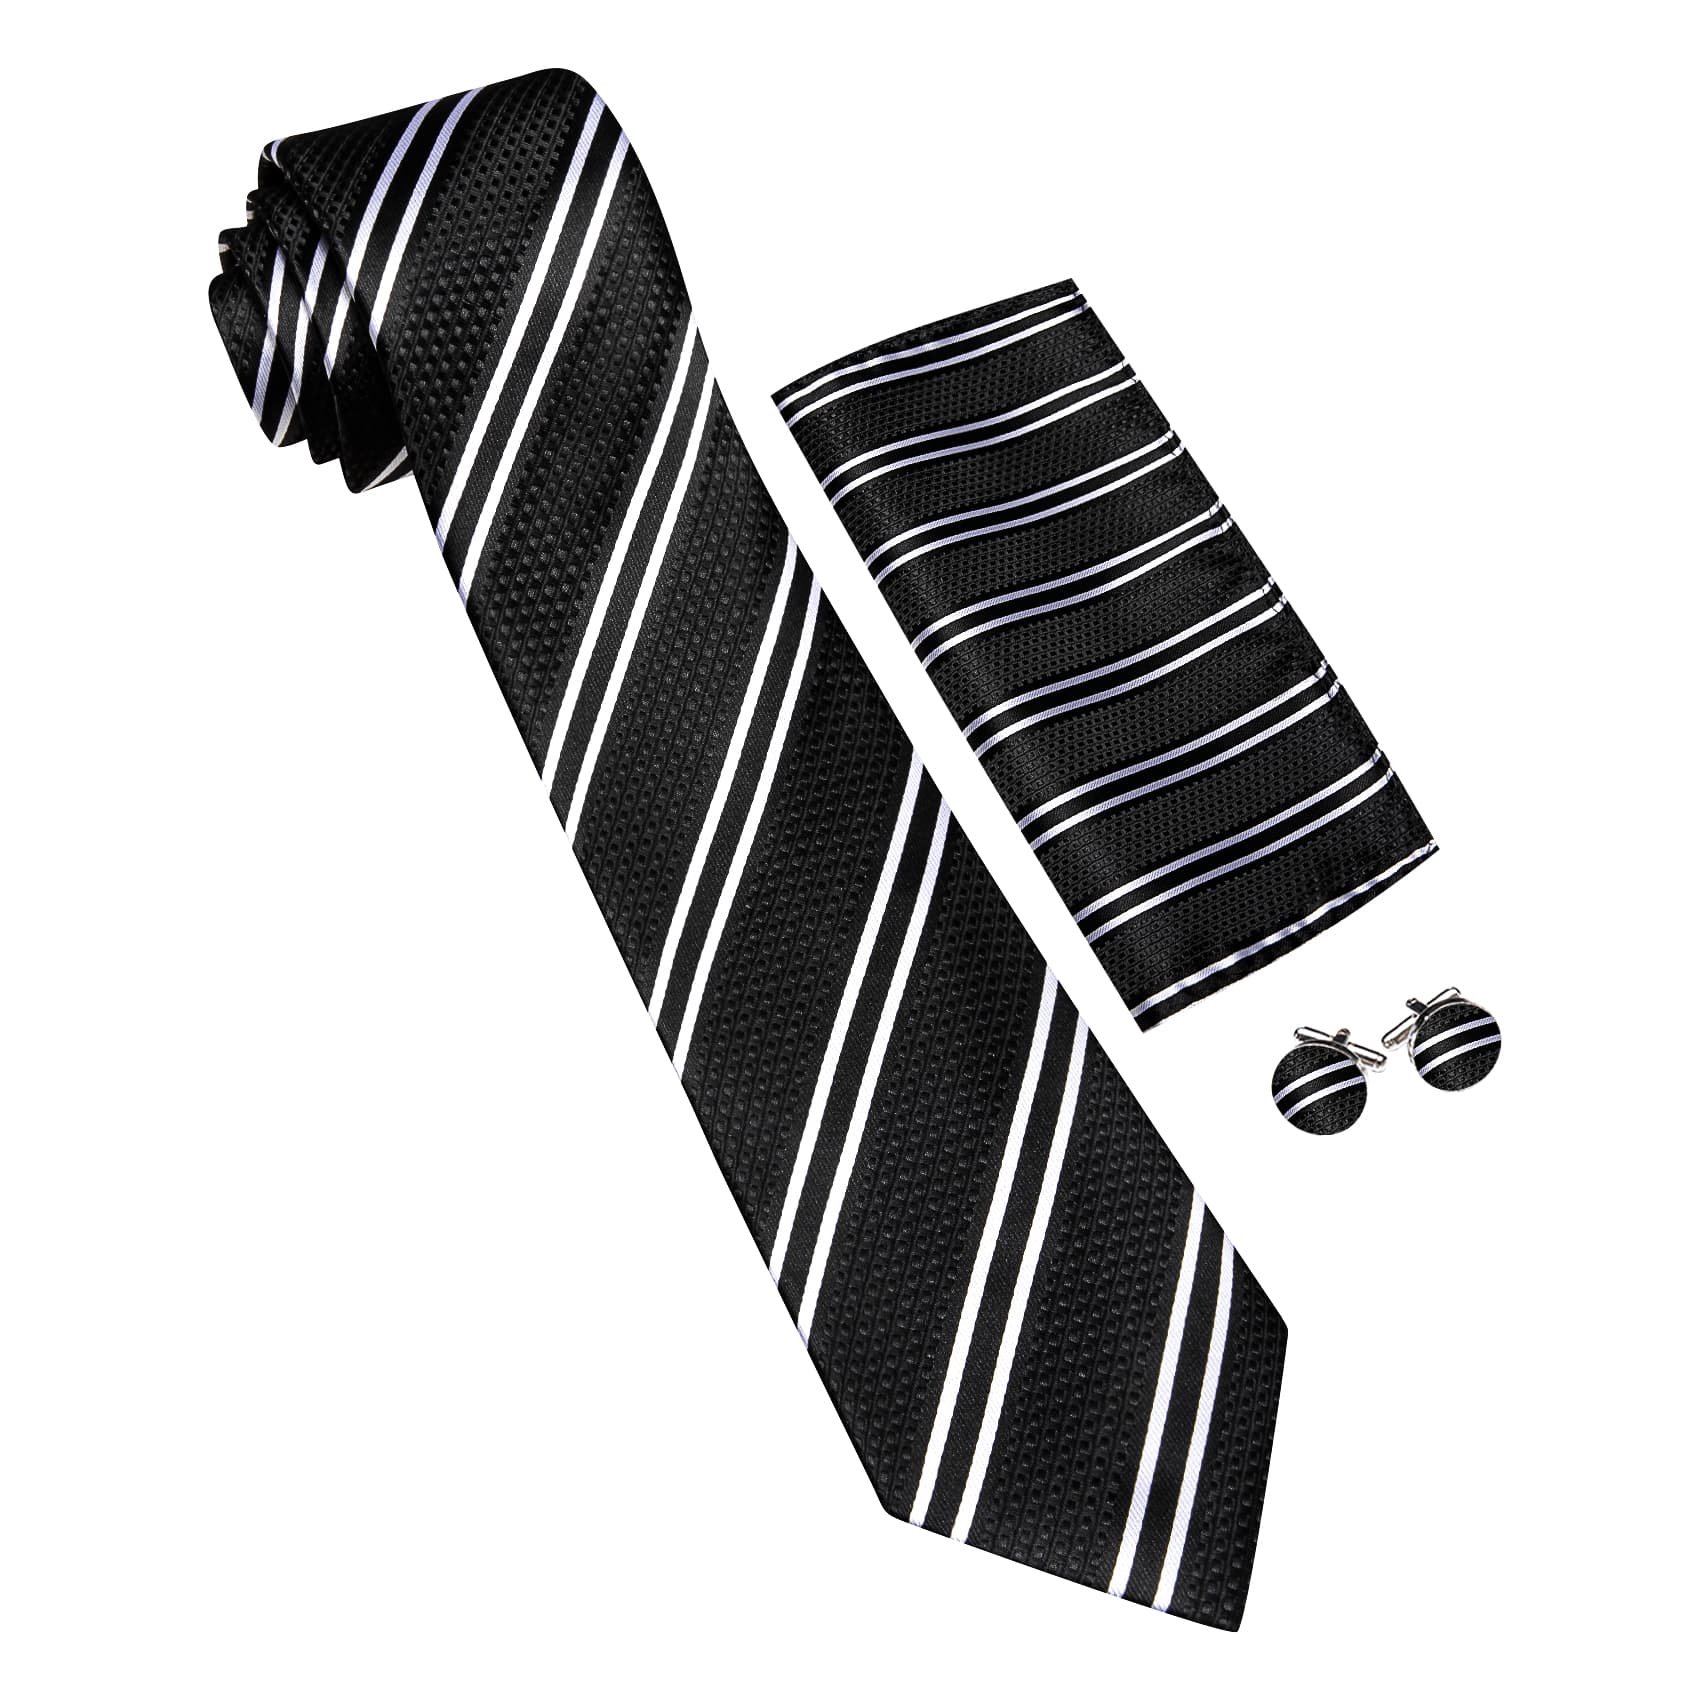  Mens Striped Tie Black Necktie Set with White Stripes